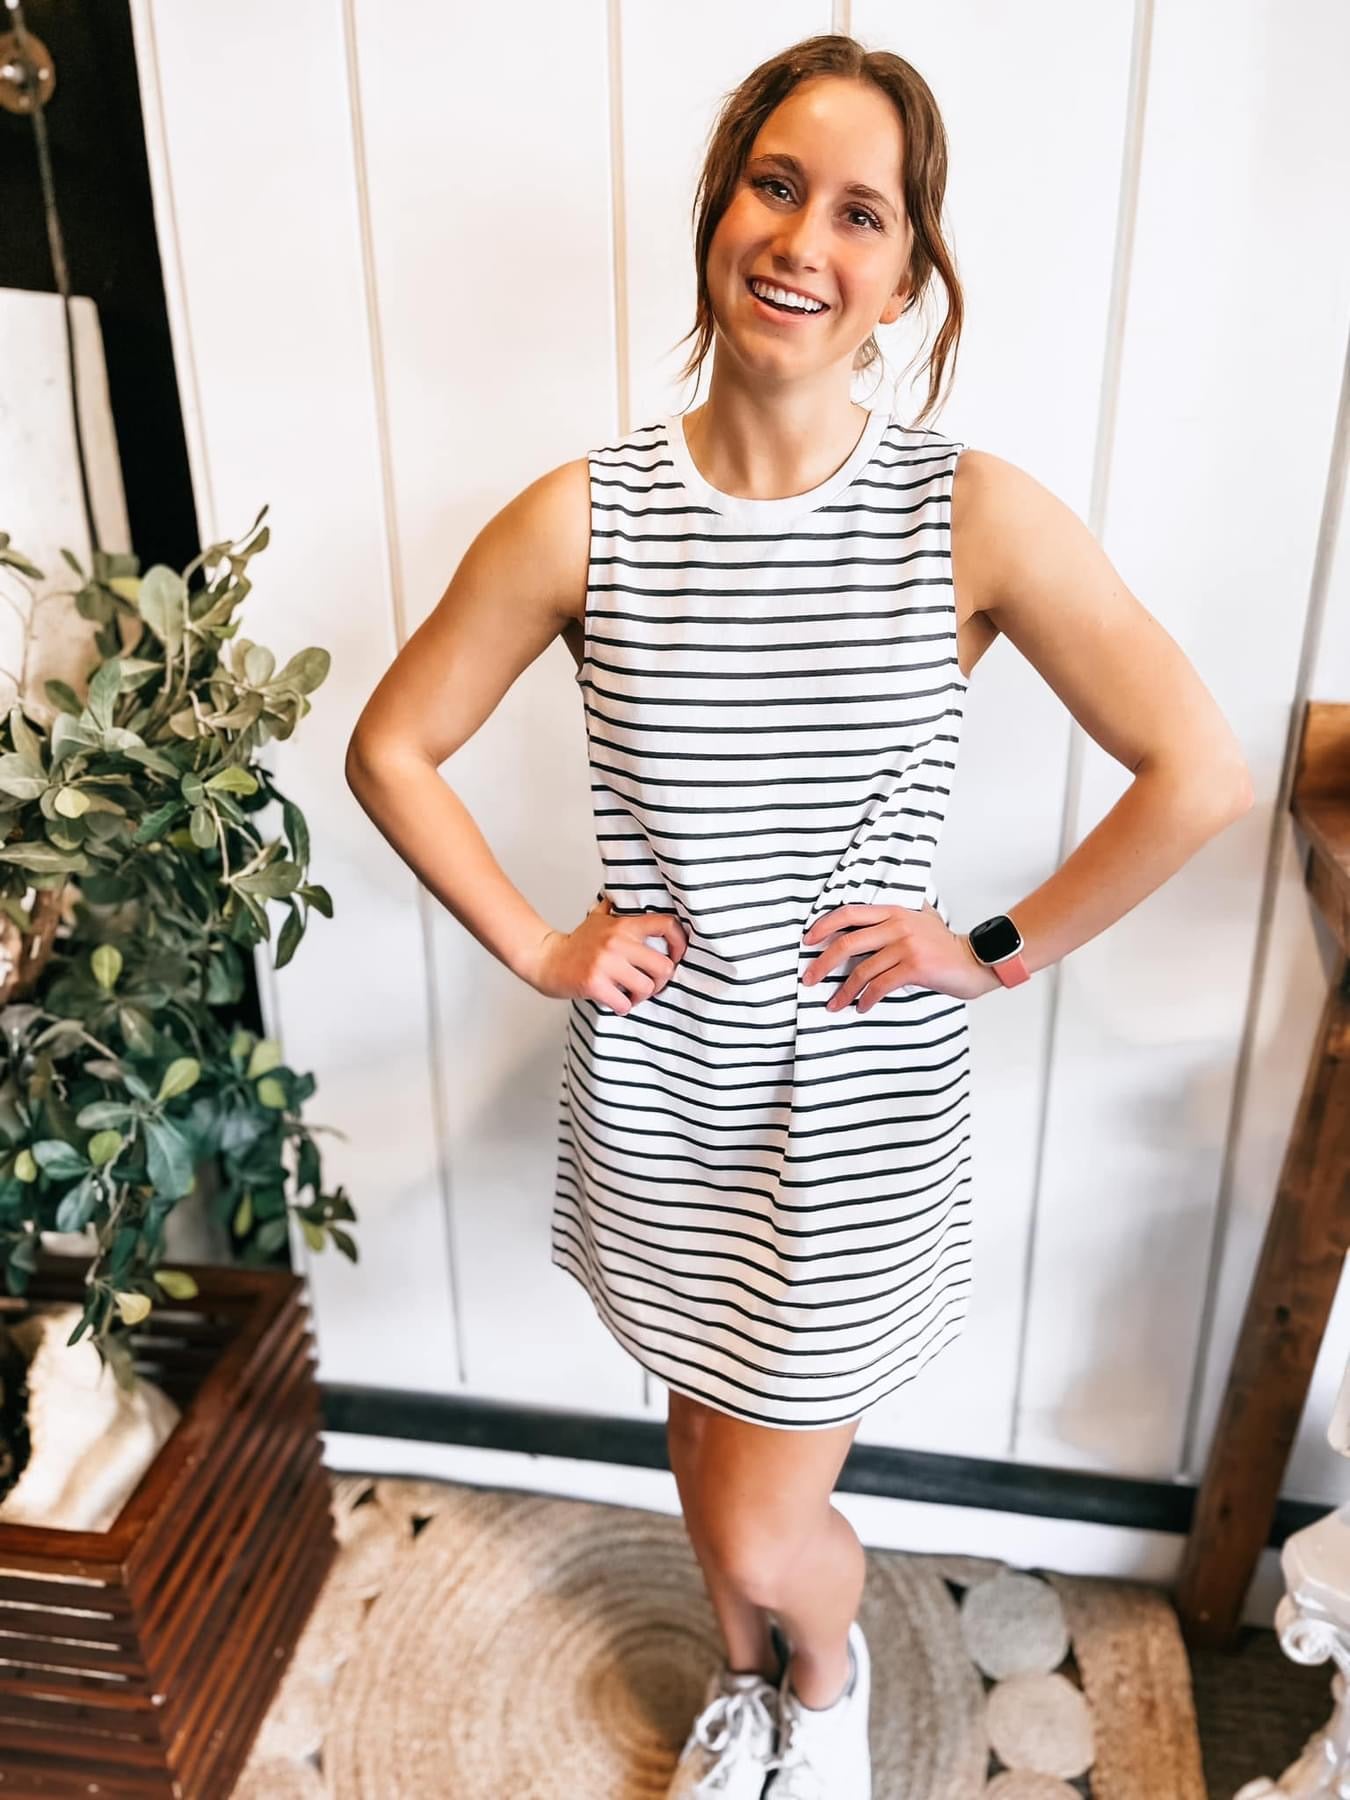 Sloane Stripe Dress